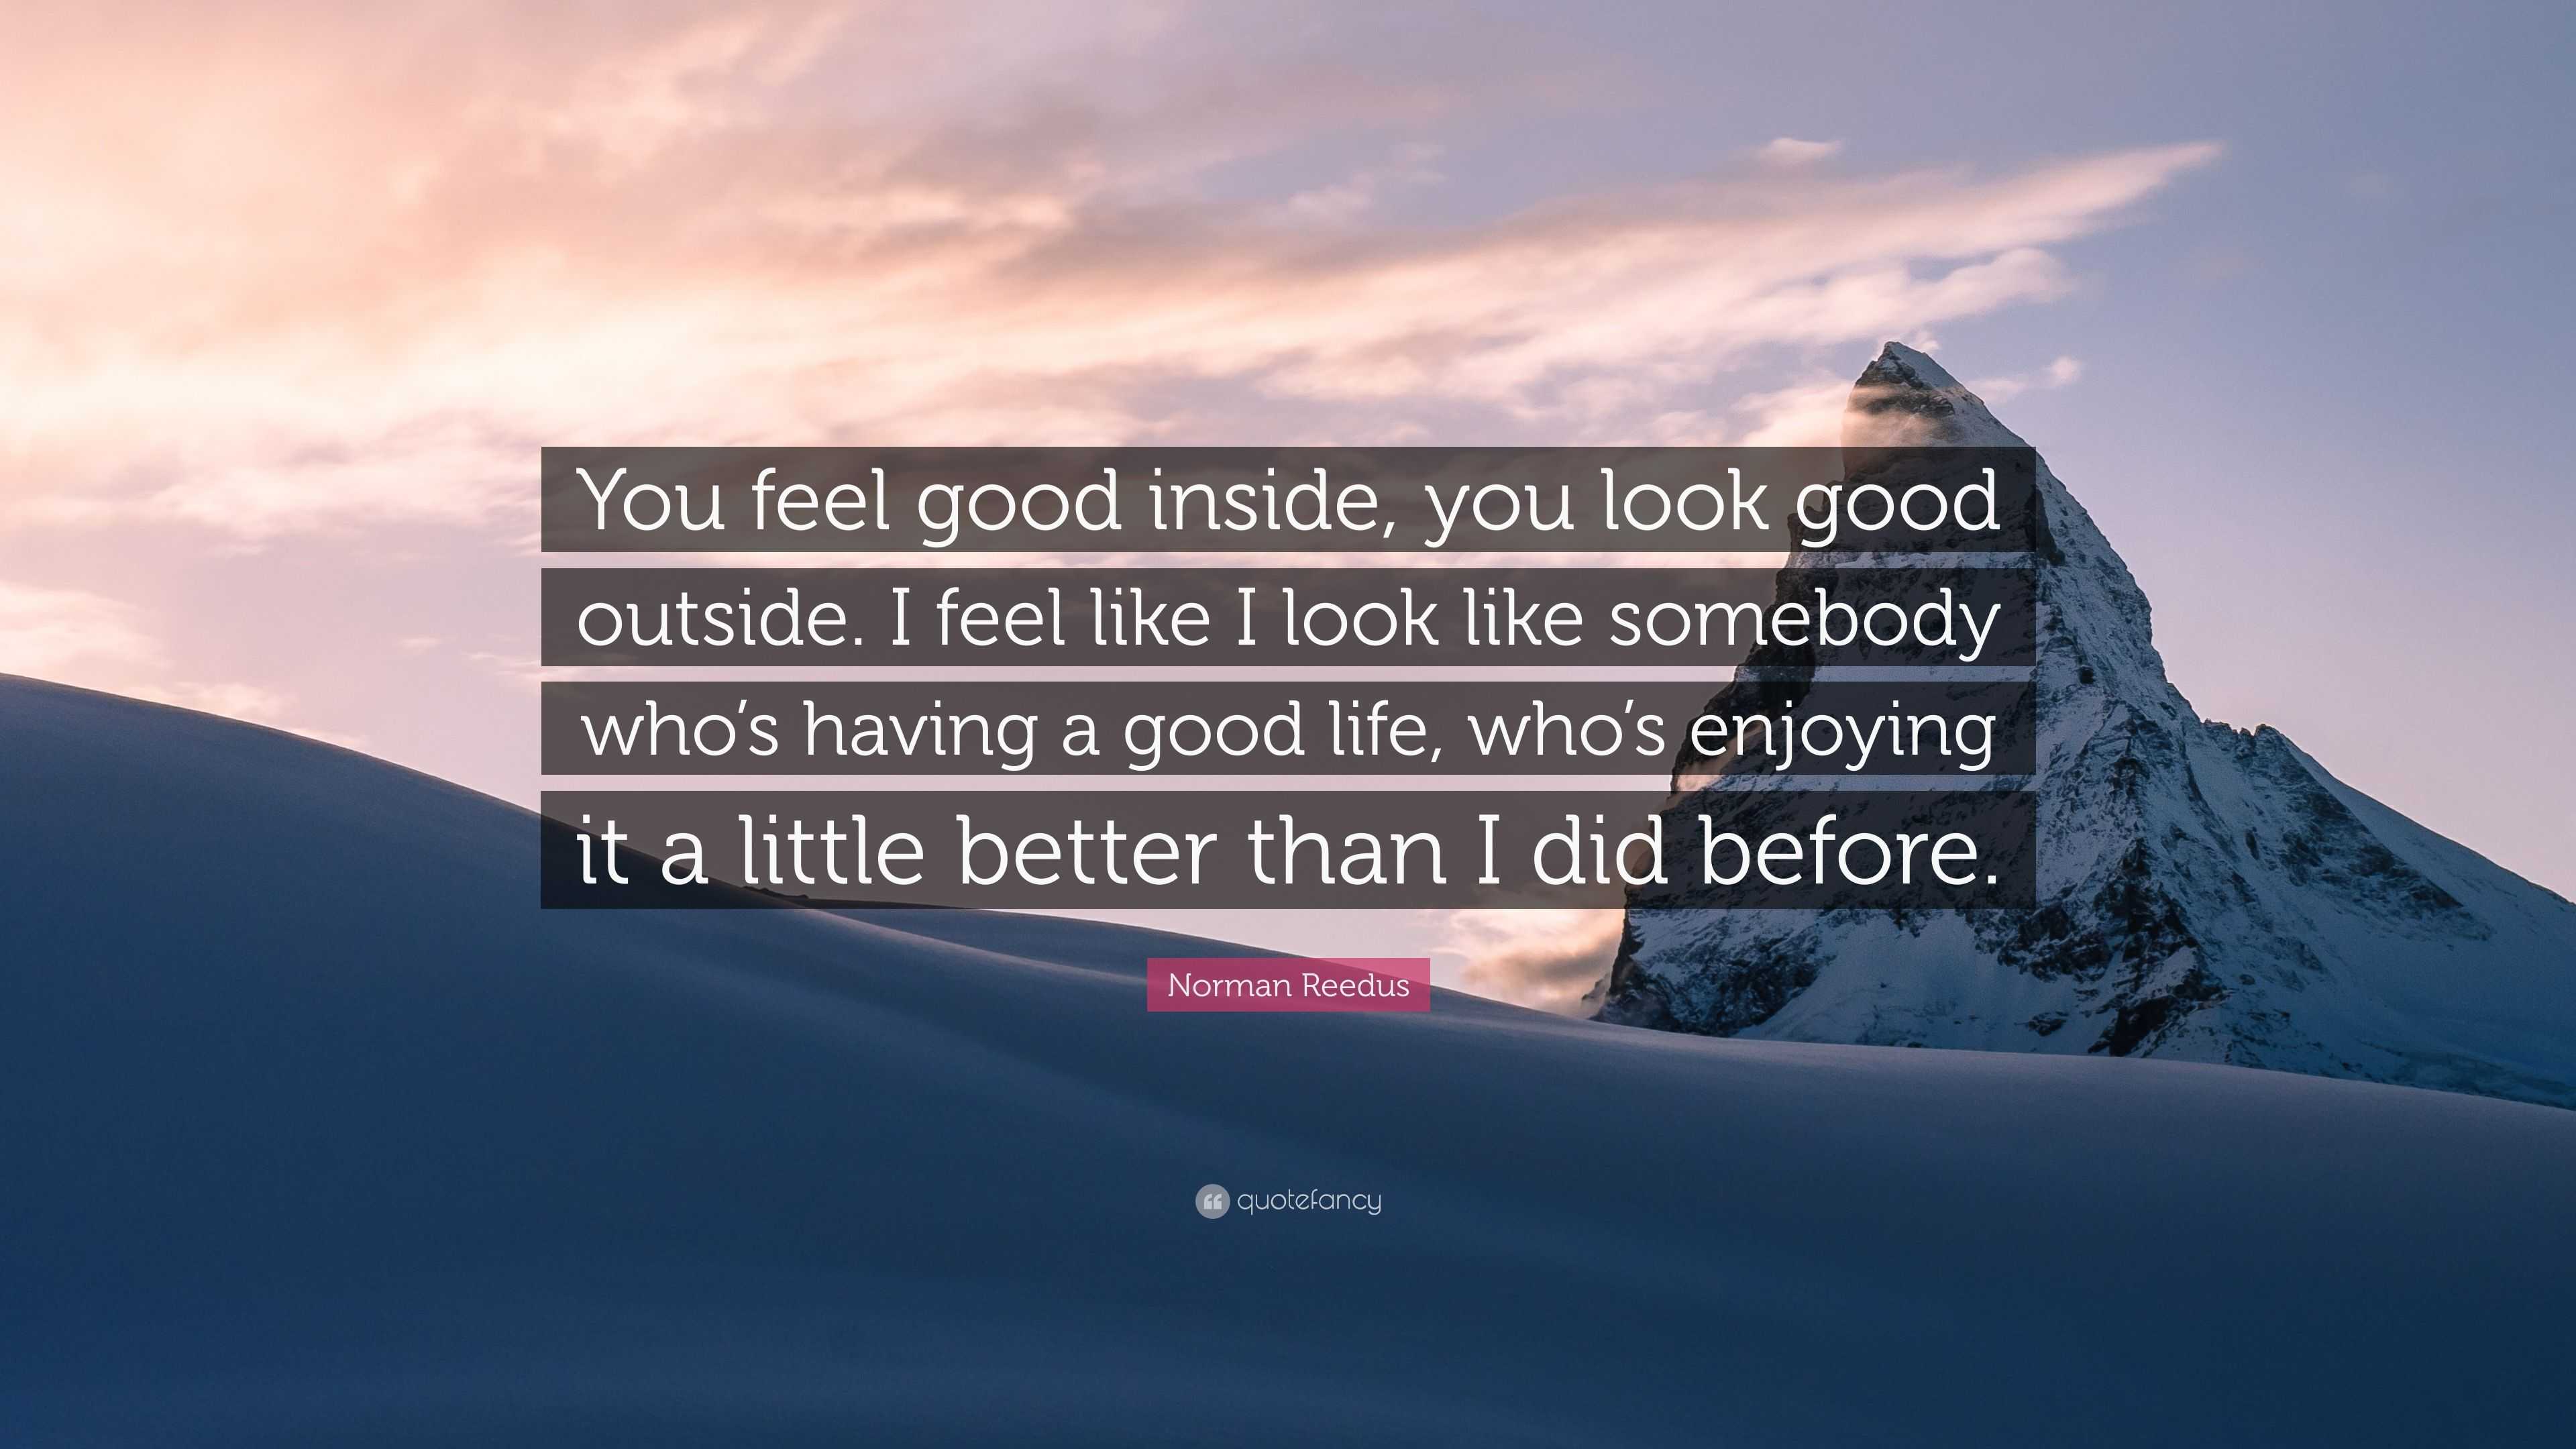 Norman Reedus Quote: “You feel good inside, you look good outside. I feel  like I look like somebody who's having a good life, who's enjoying i”